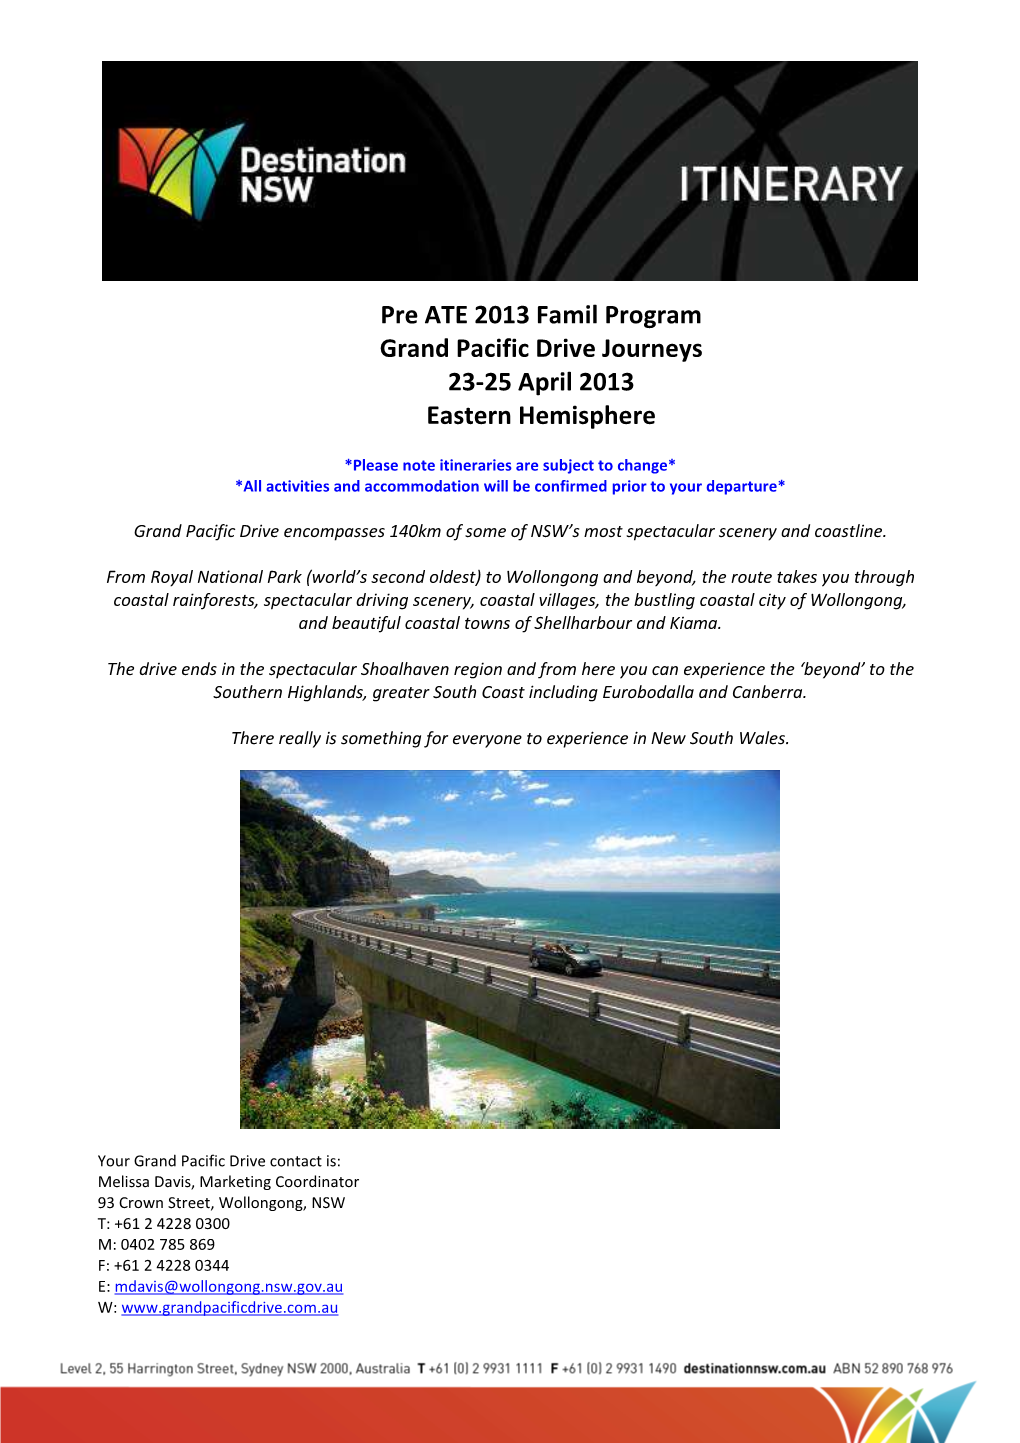 Pre ATE 2013 Famil Program Grand Pacific Drive Journeys 23-25 April 2013 Eastern Hemisphere